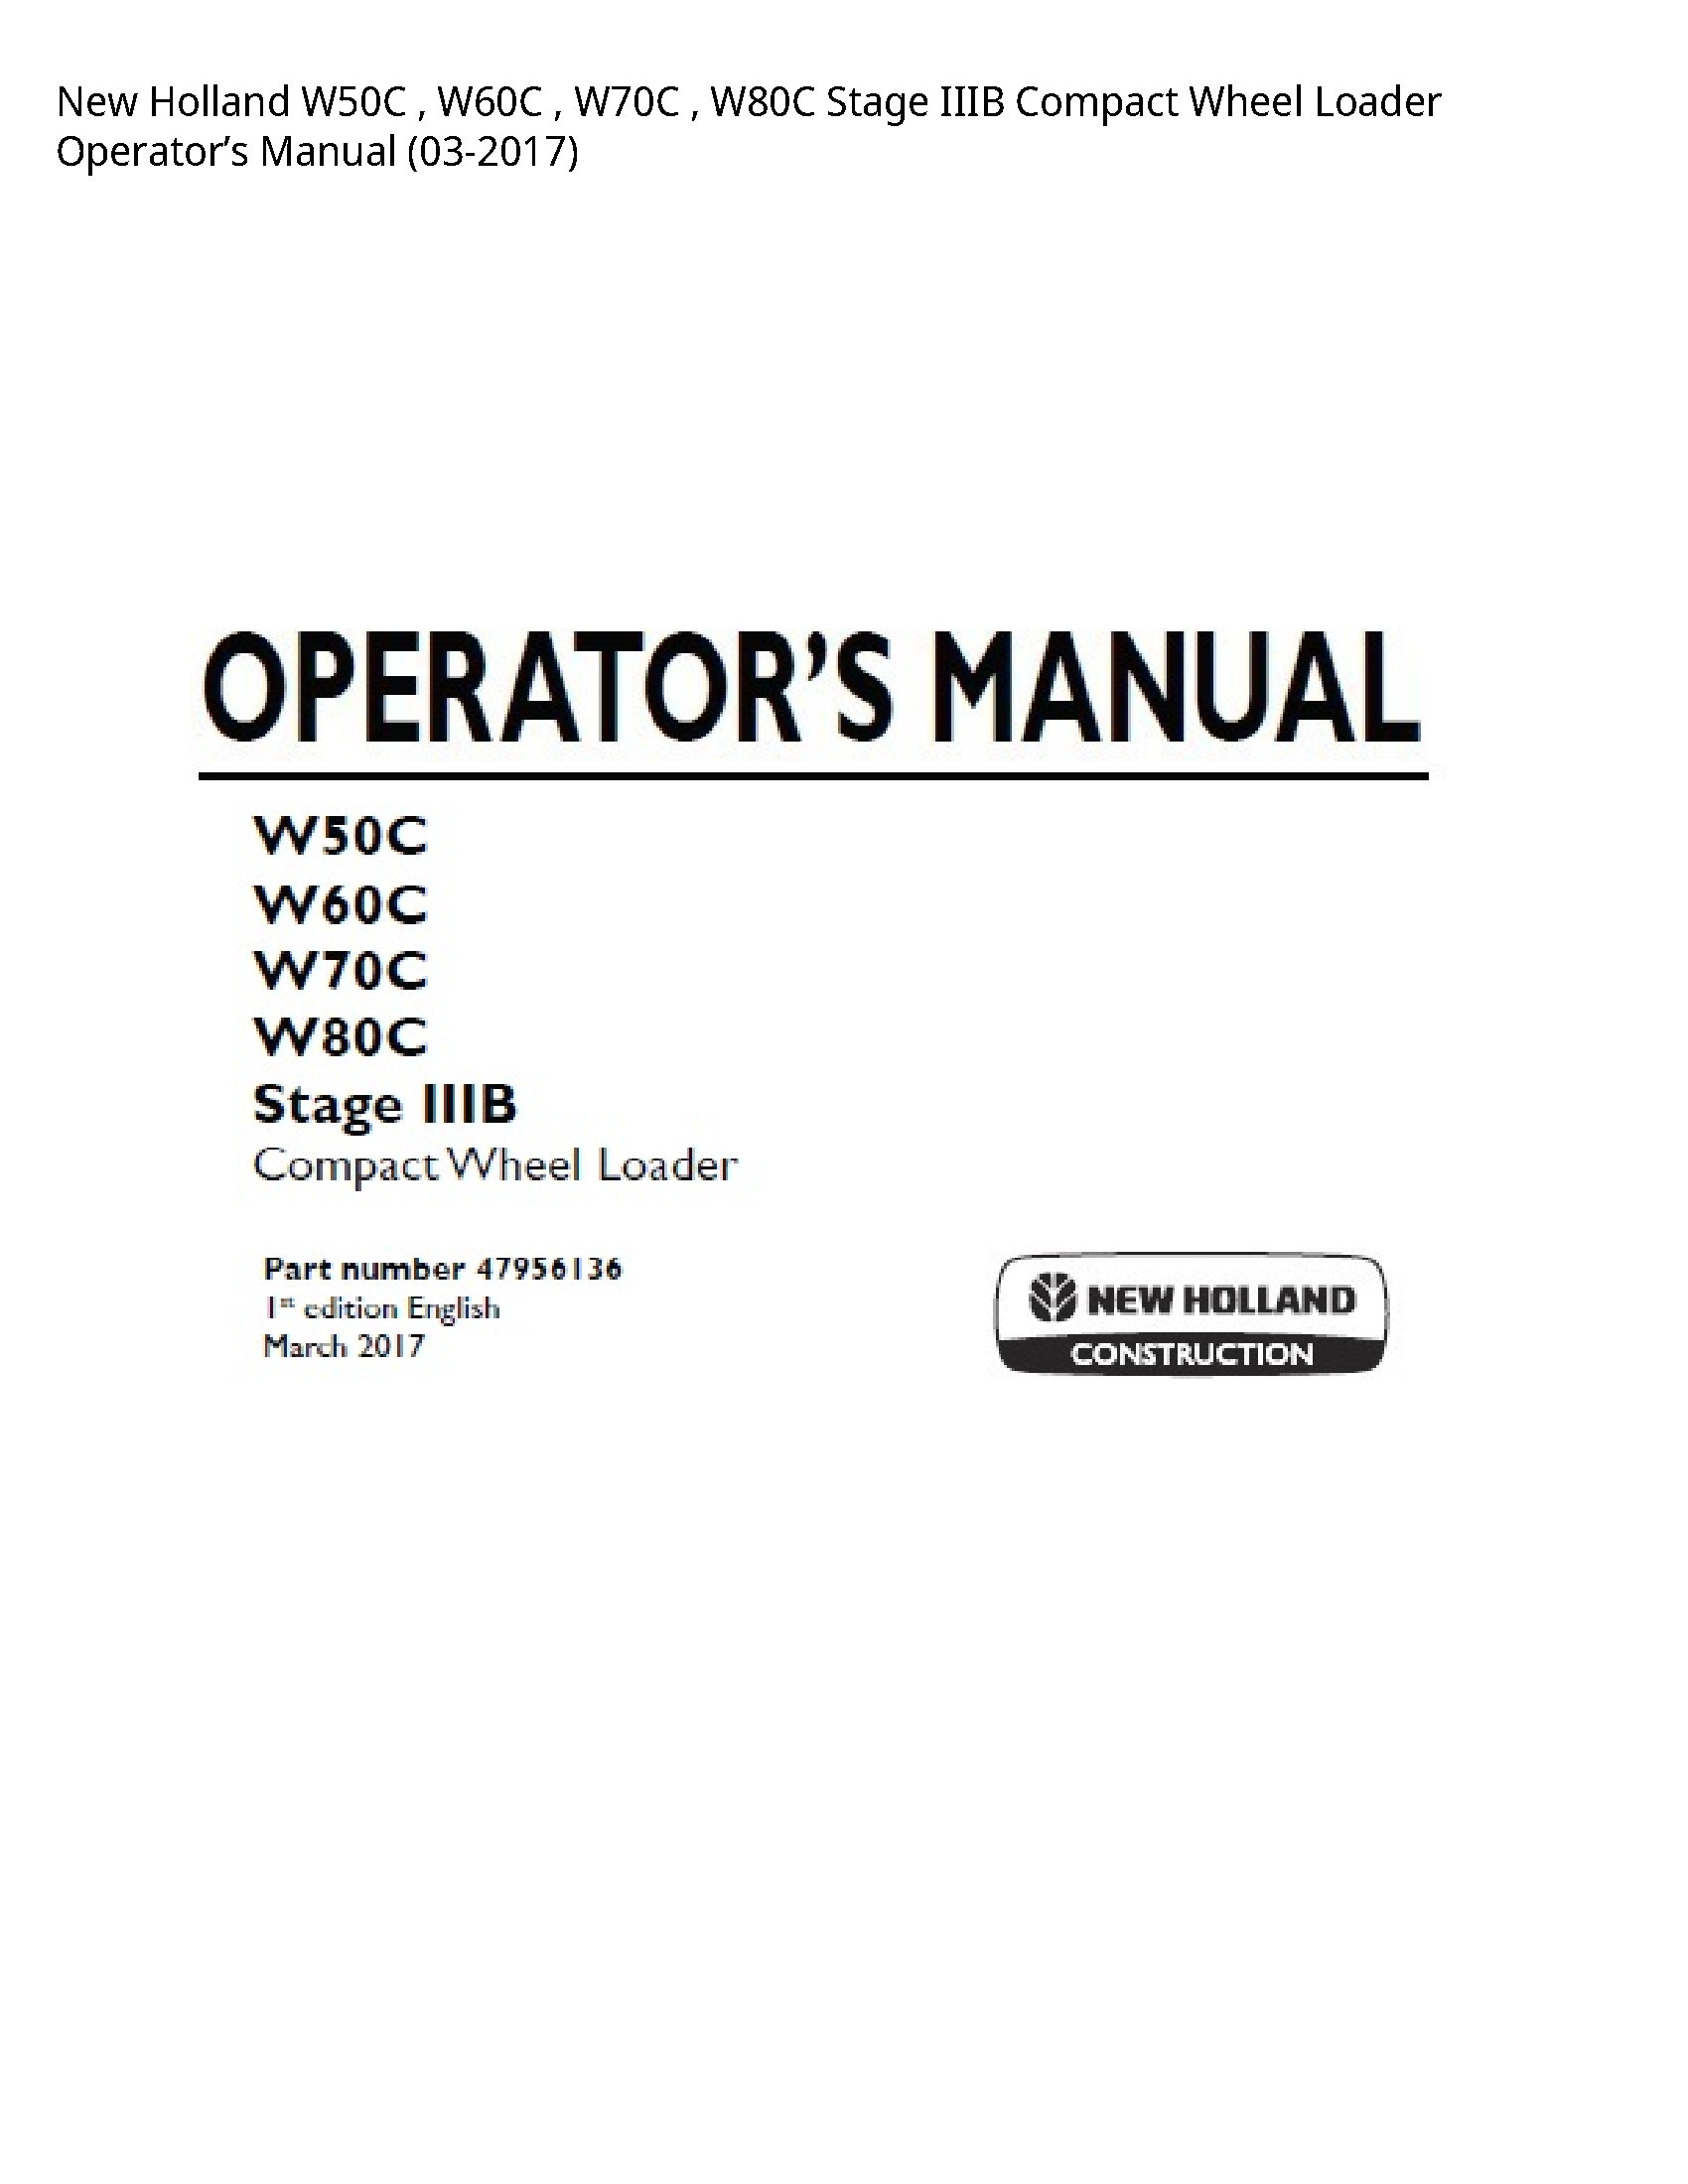 New Holland W50C Stage IIIB Compact Wheel Loader Operator’s manual